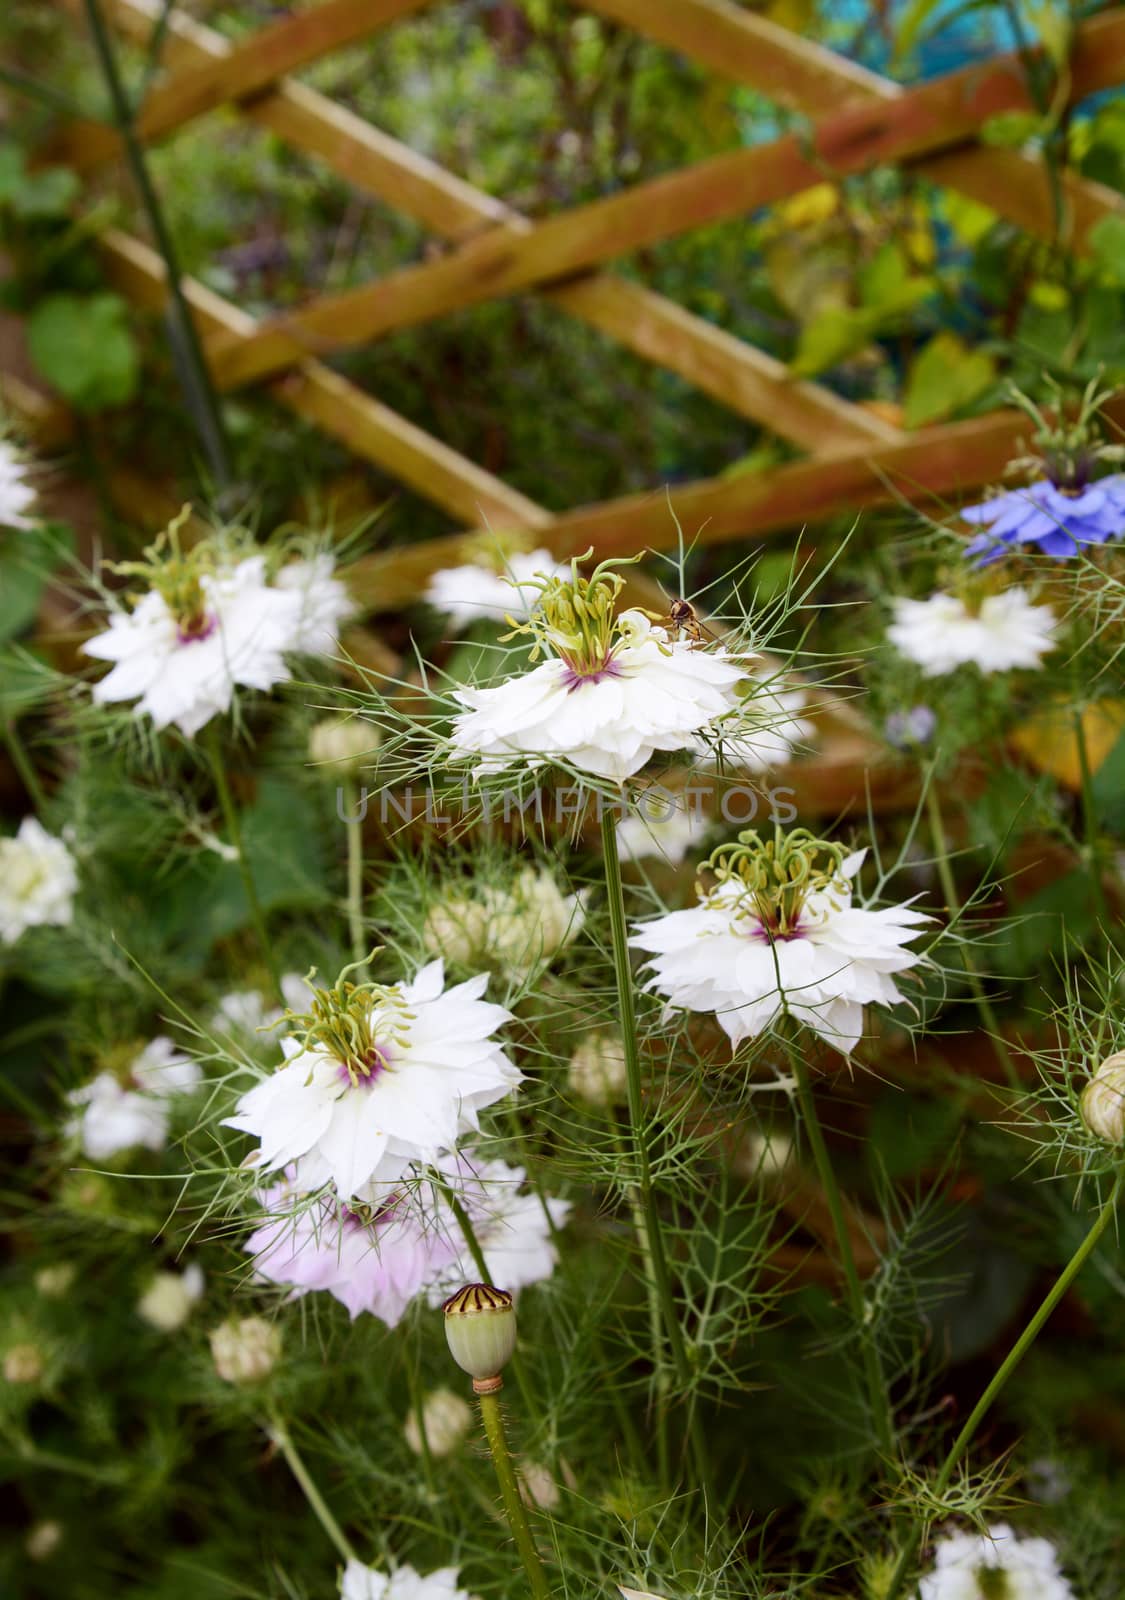 White love in a mist - nigella - flowers  by sarahdoow